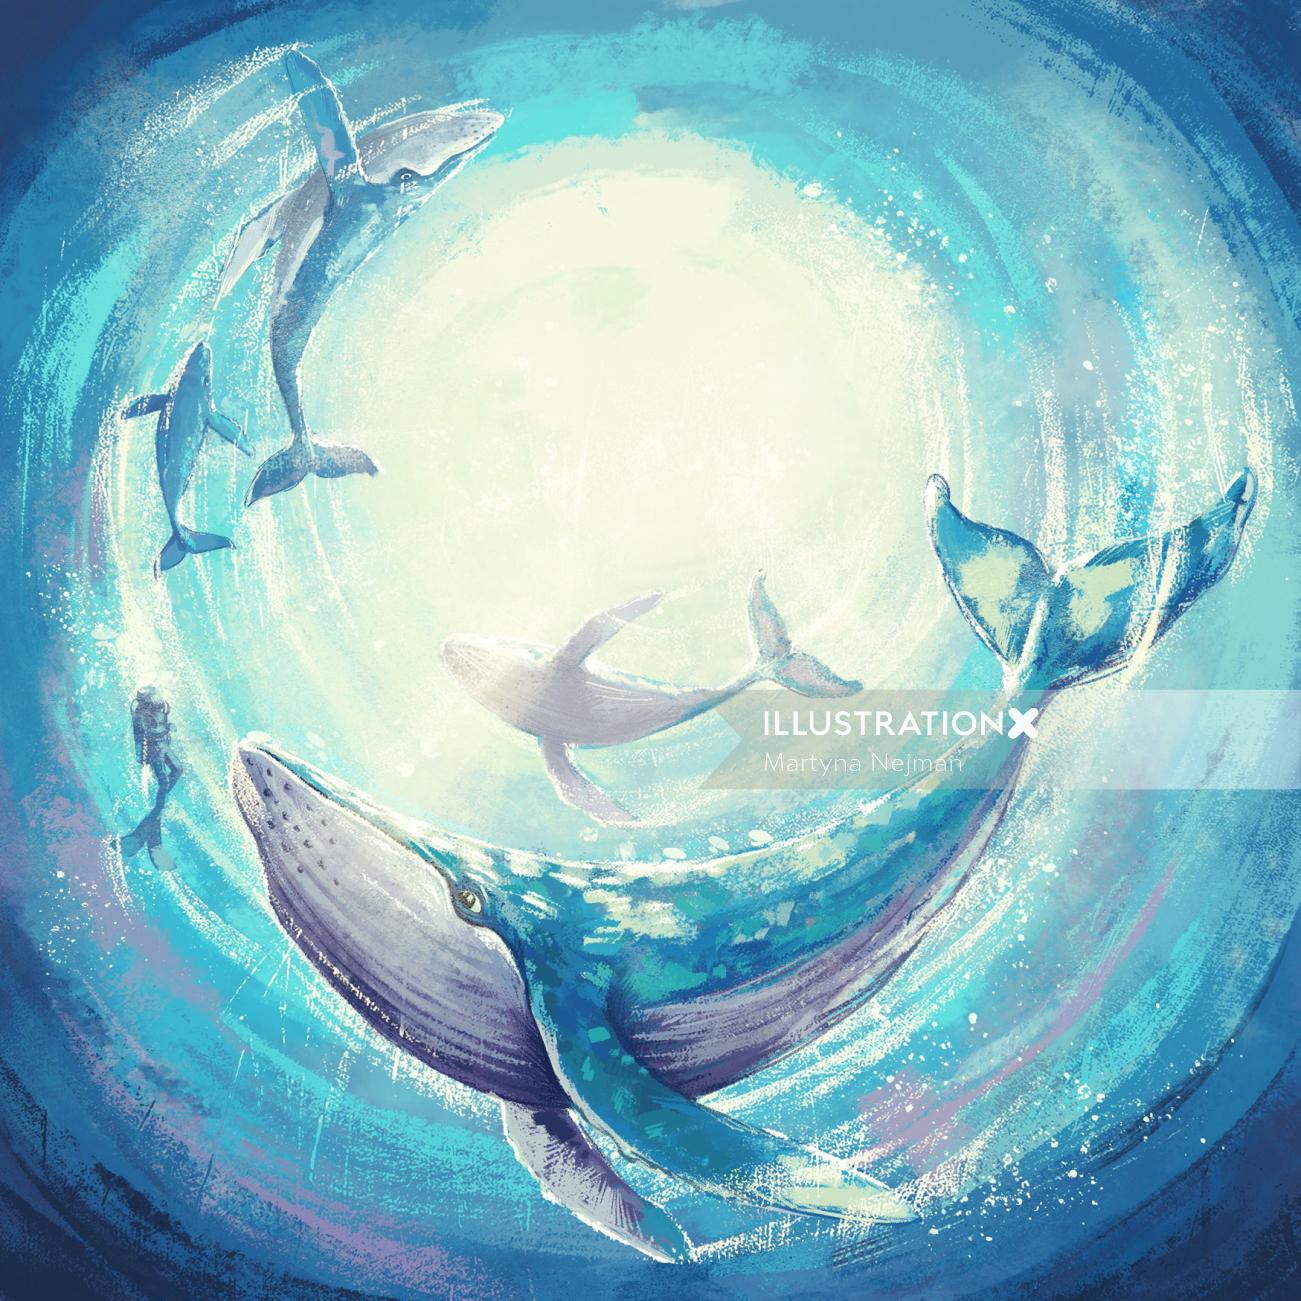 Podwodny świat (Underwater world) book  illustration